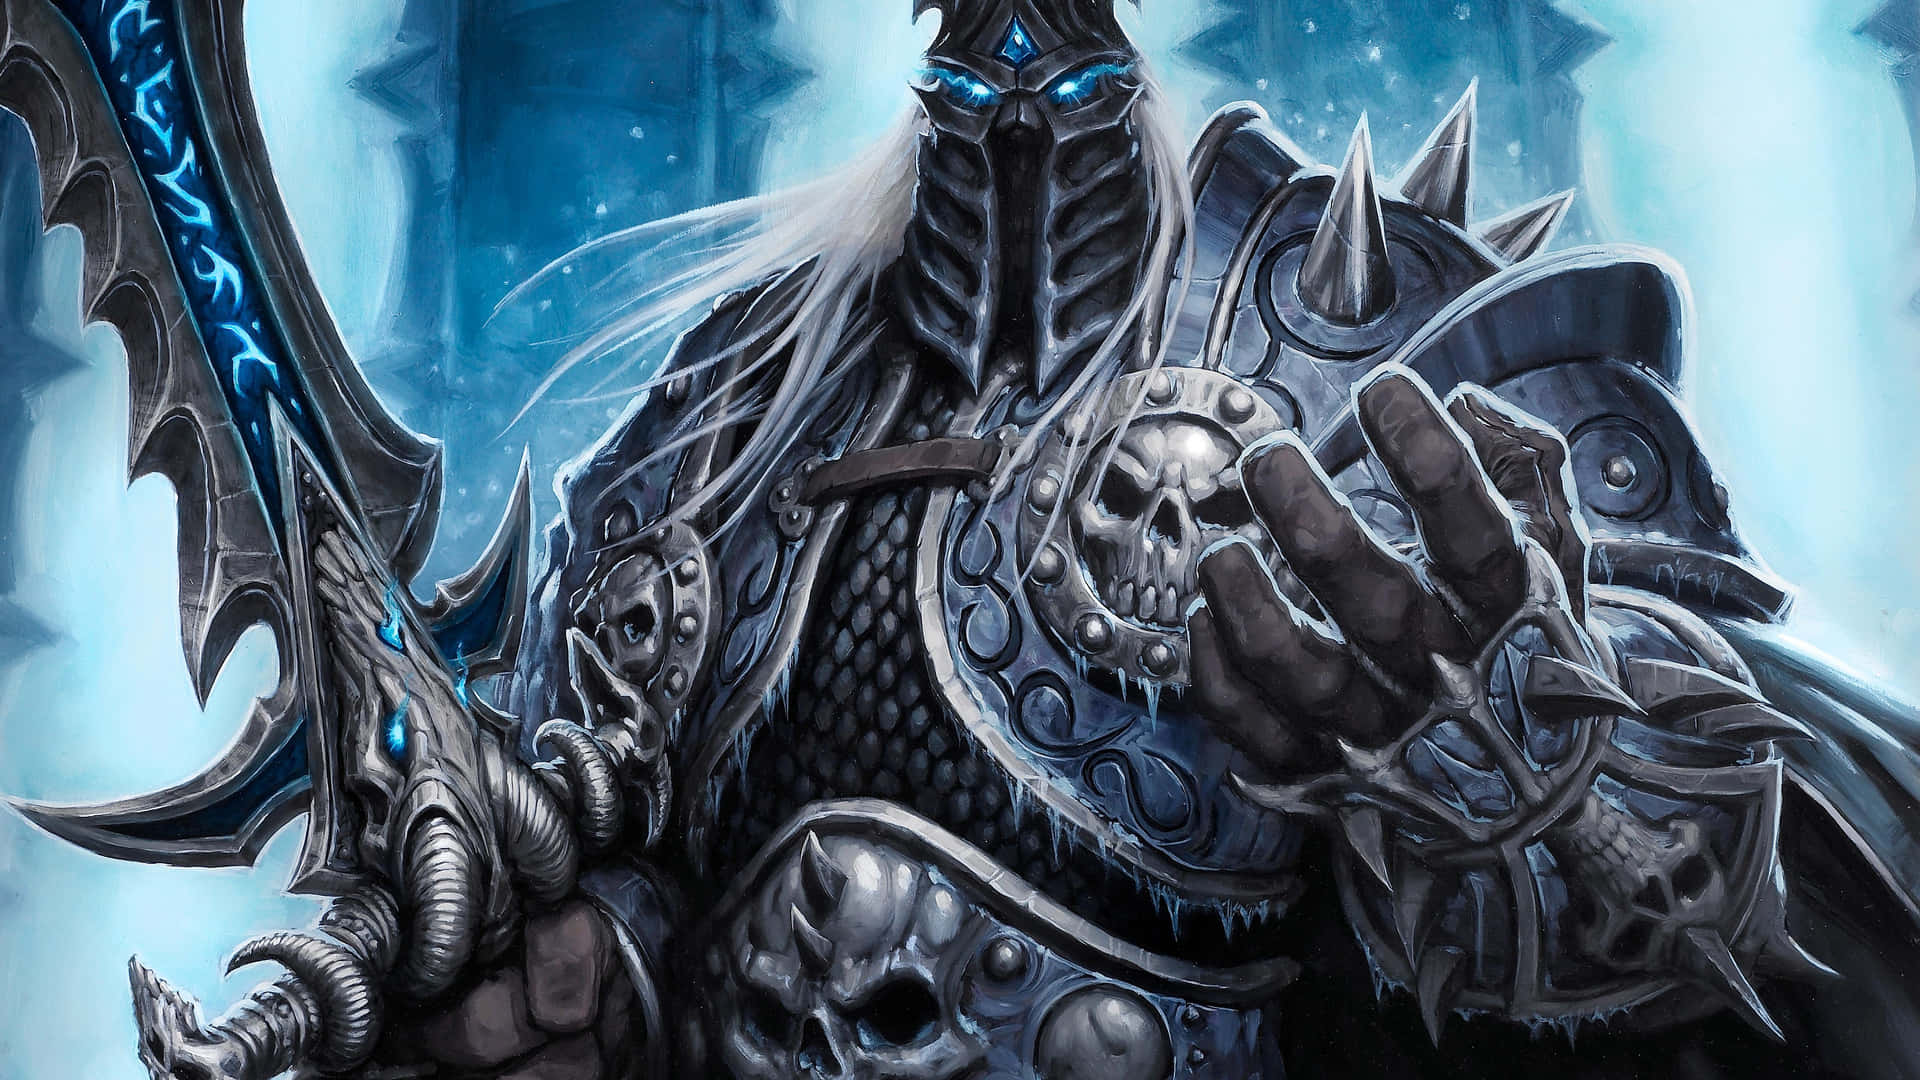 Stunning World of Warcraft Races in Epic Battle Scene Wallpaper